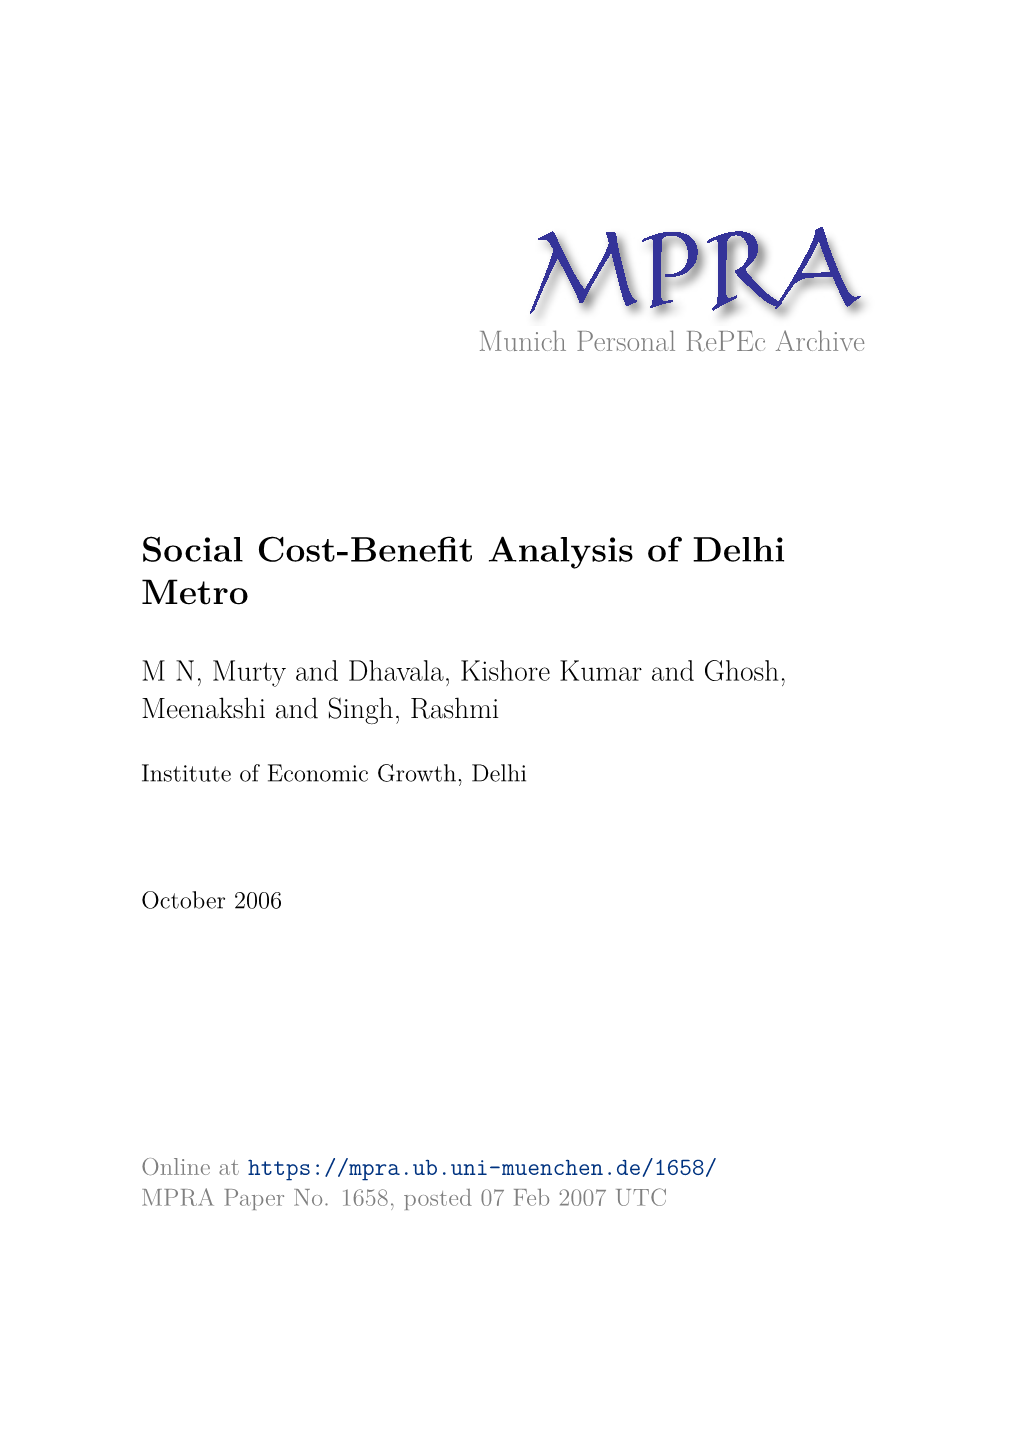 Social Cost-Benefit Analysis of Delhi Metro